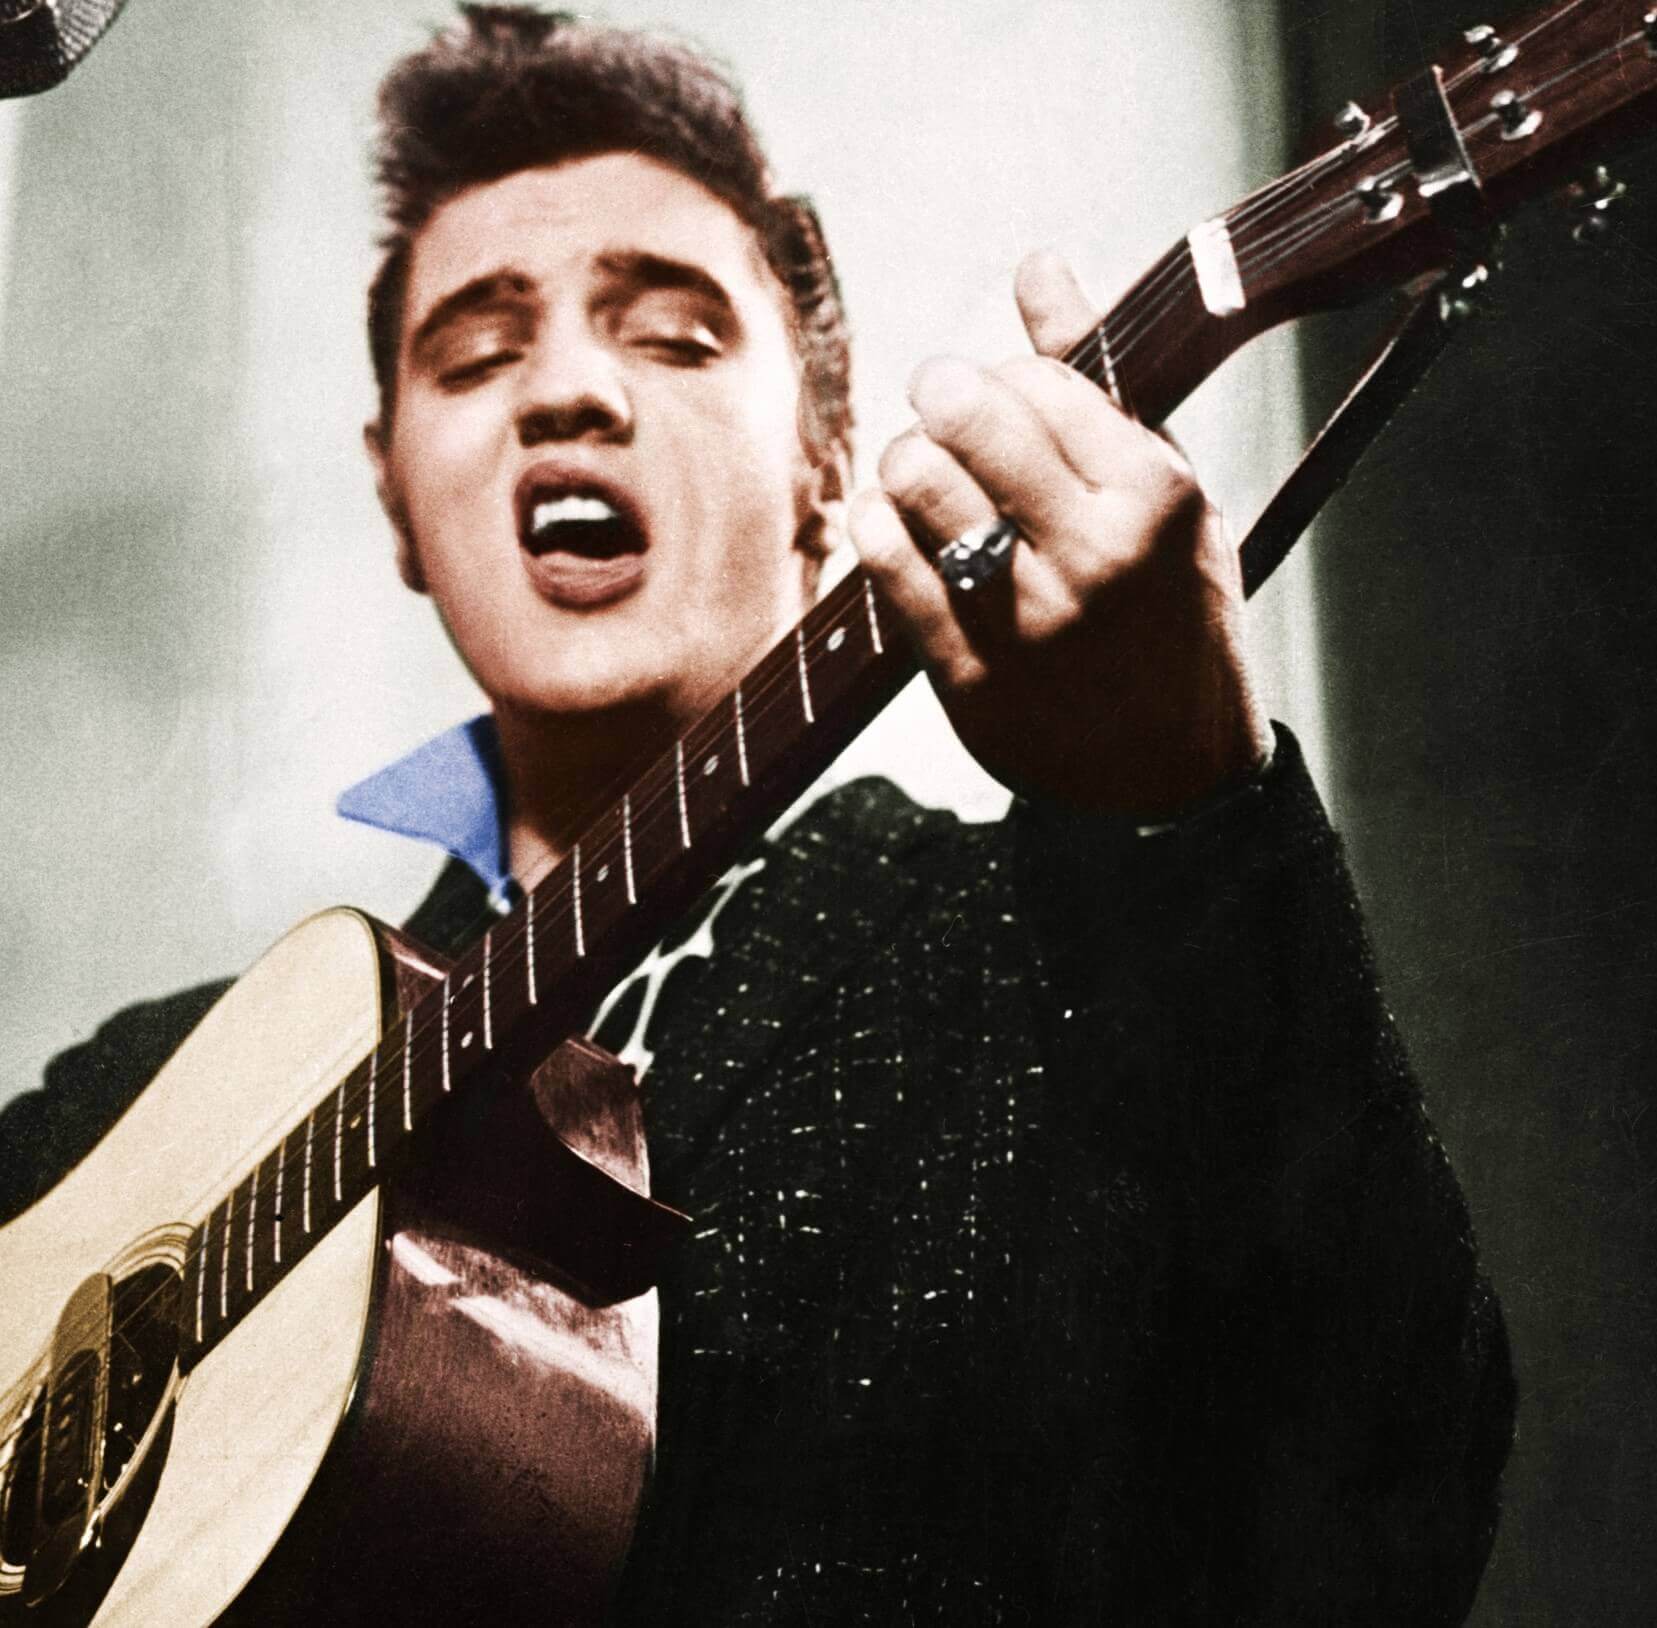 Gospel singer Elvis Presley with a guitar